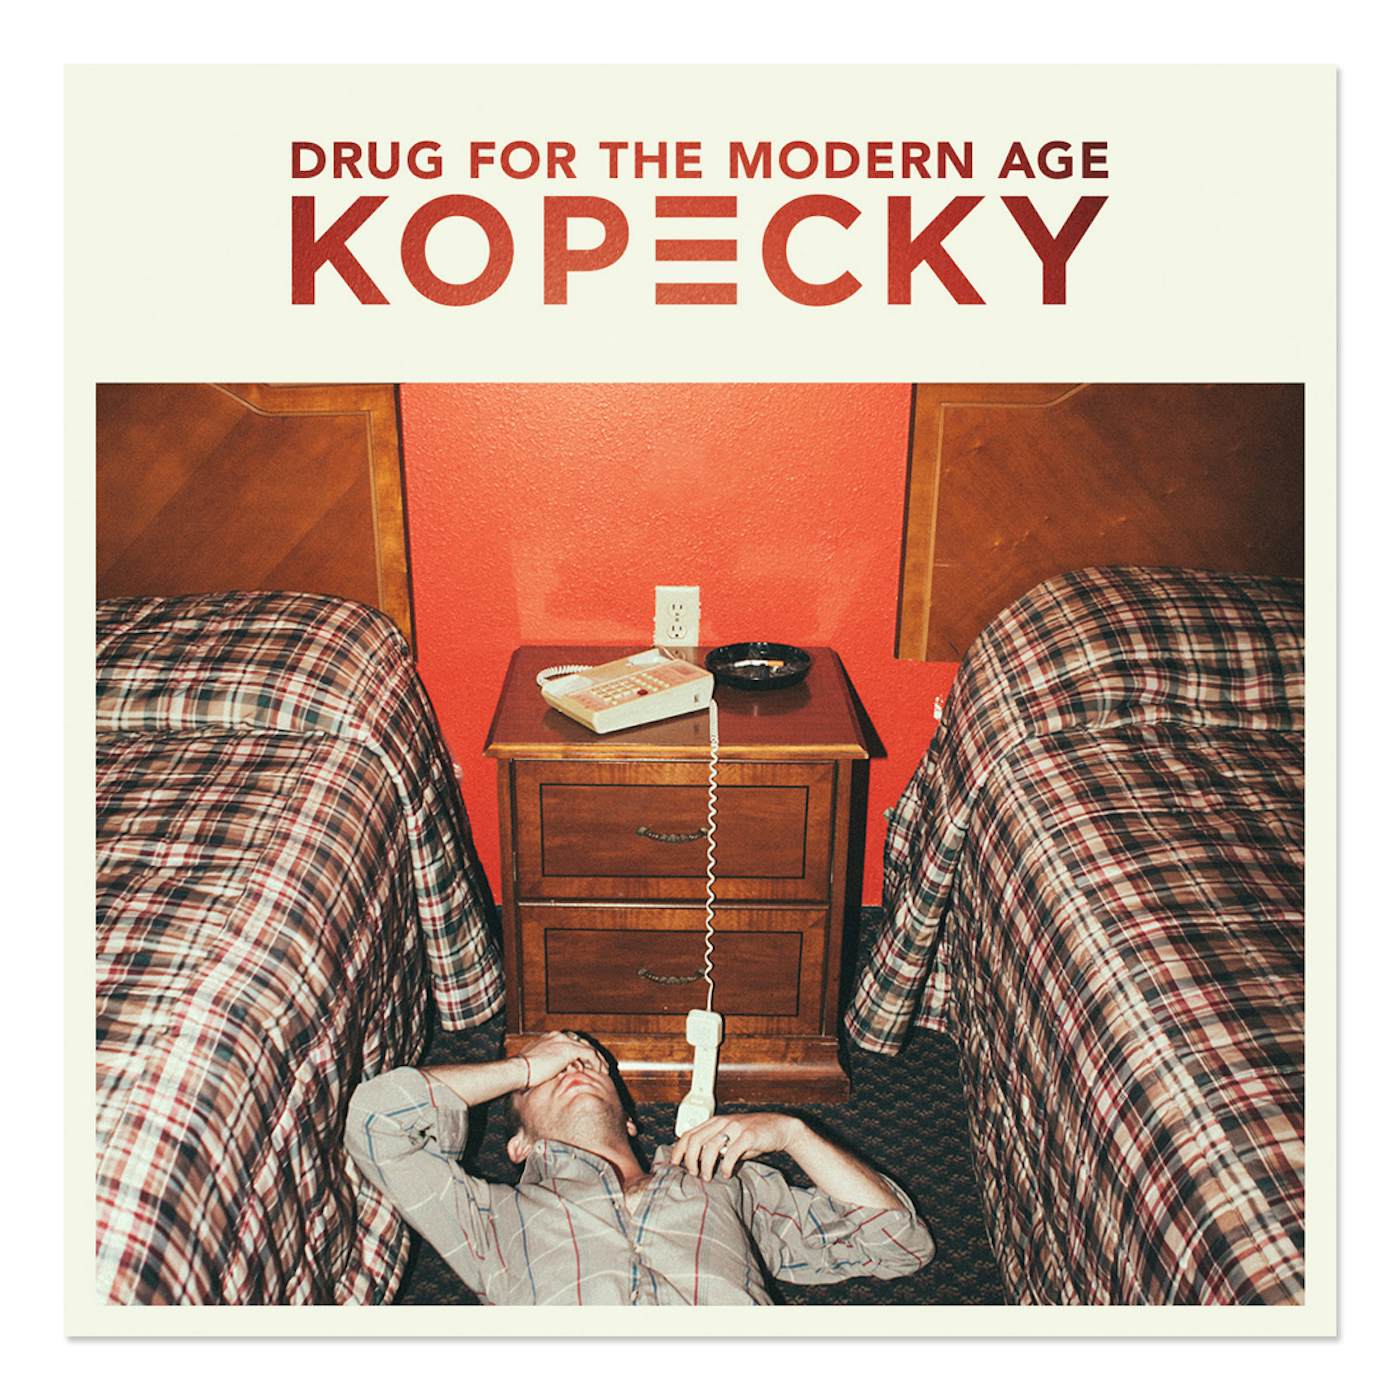 Kopecky - Drug for the Modern Age